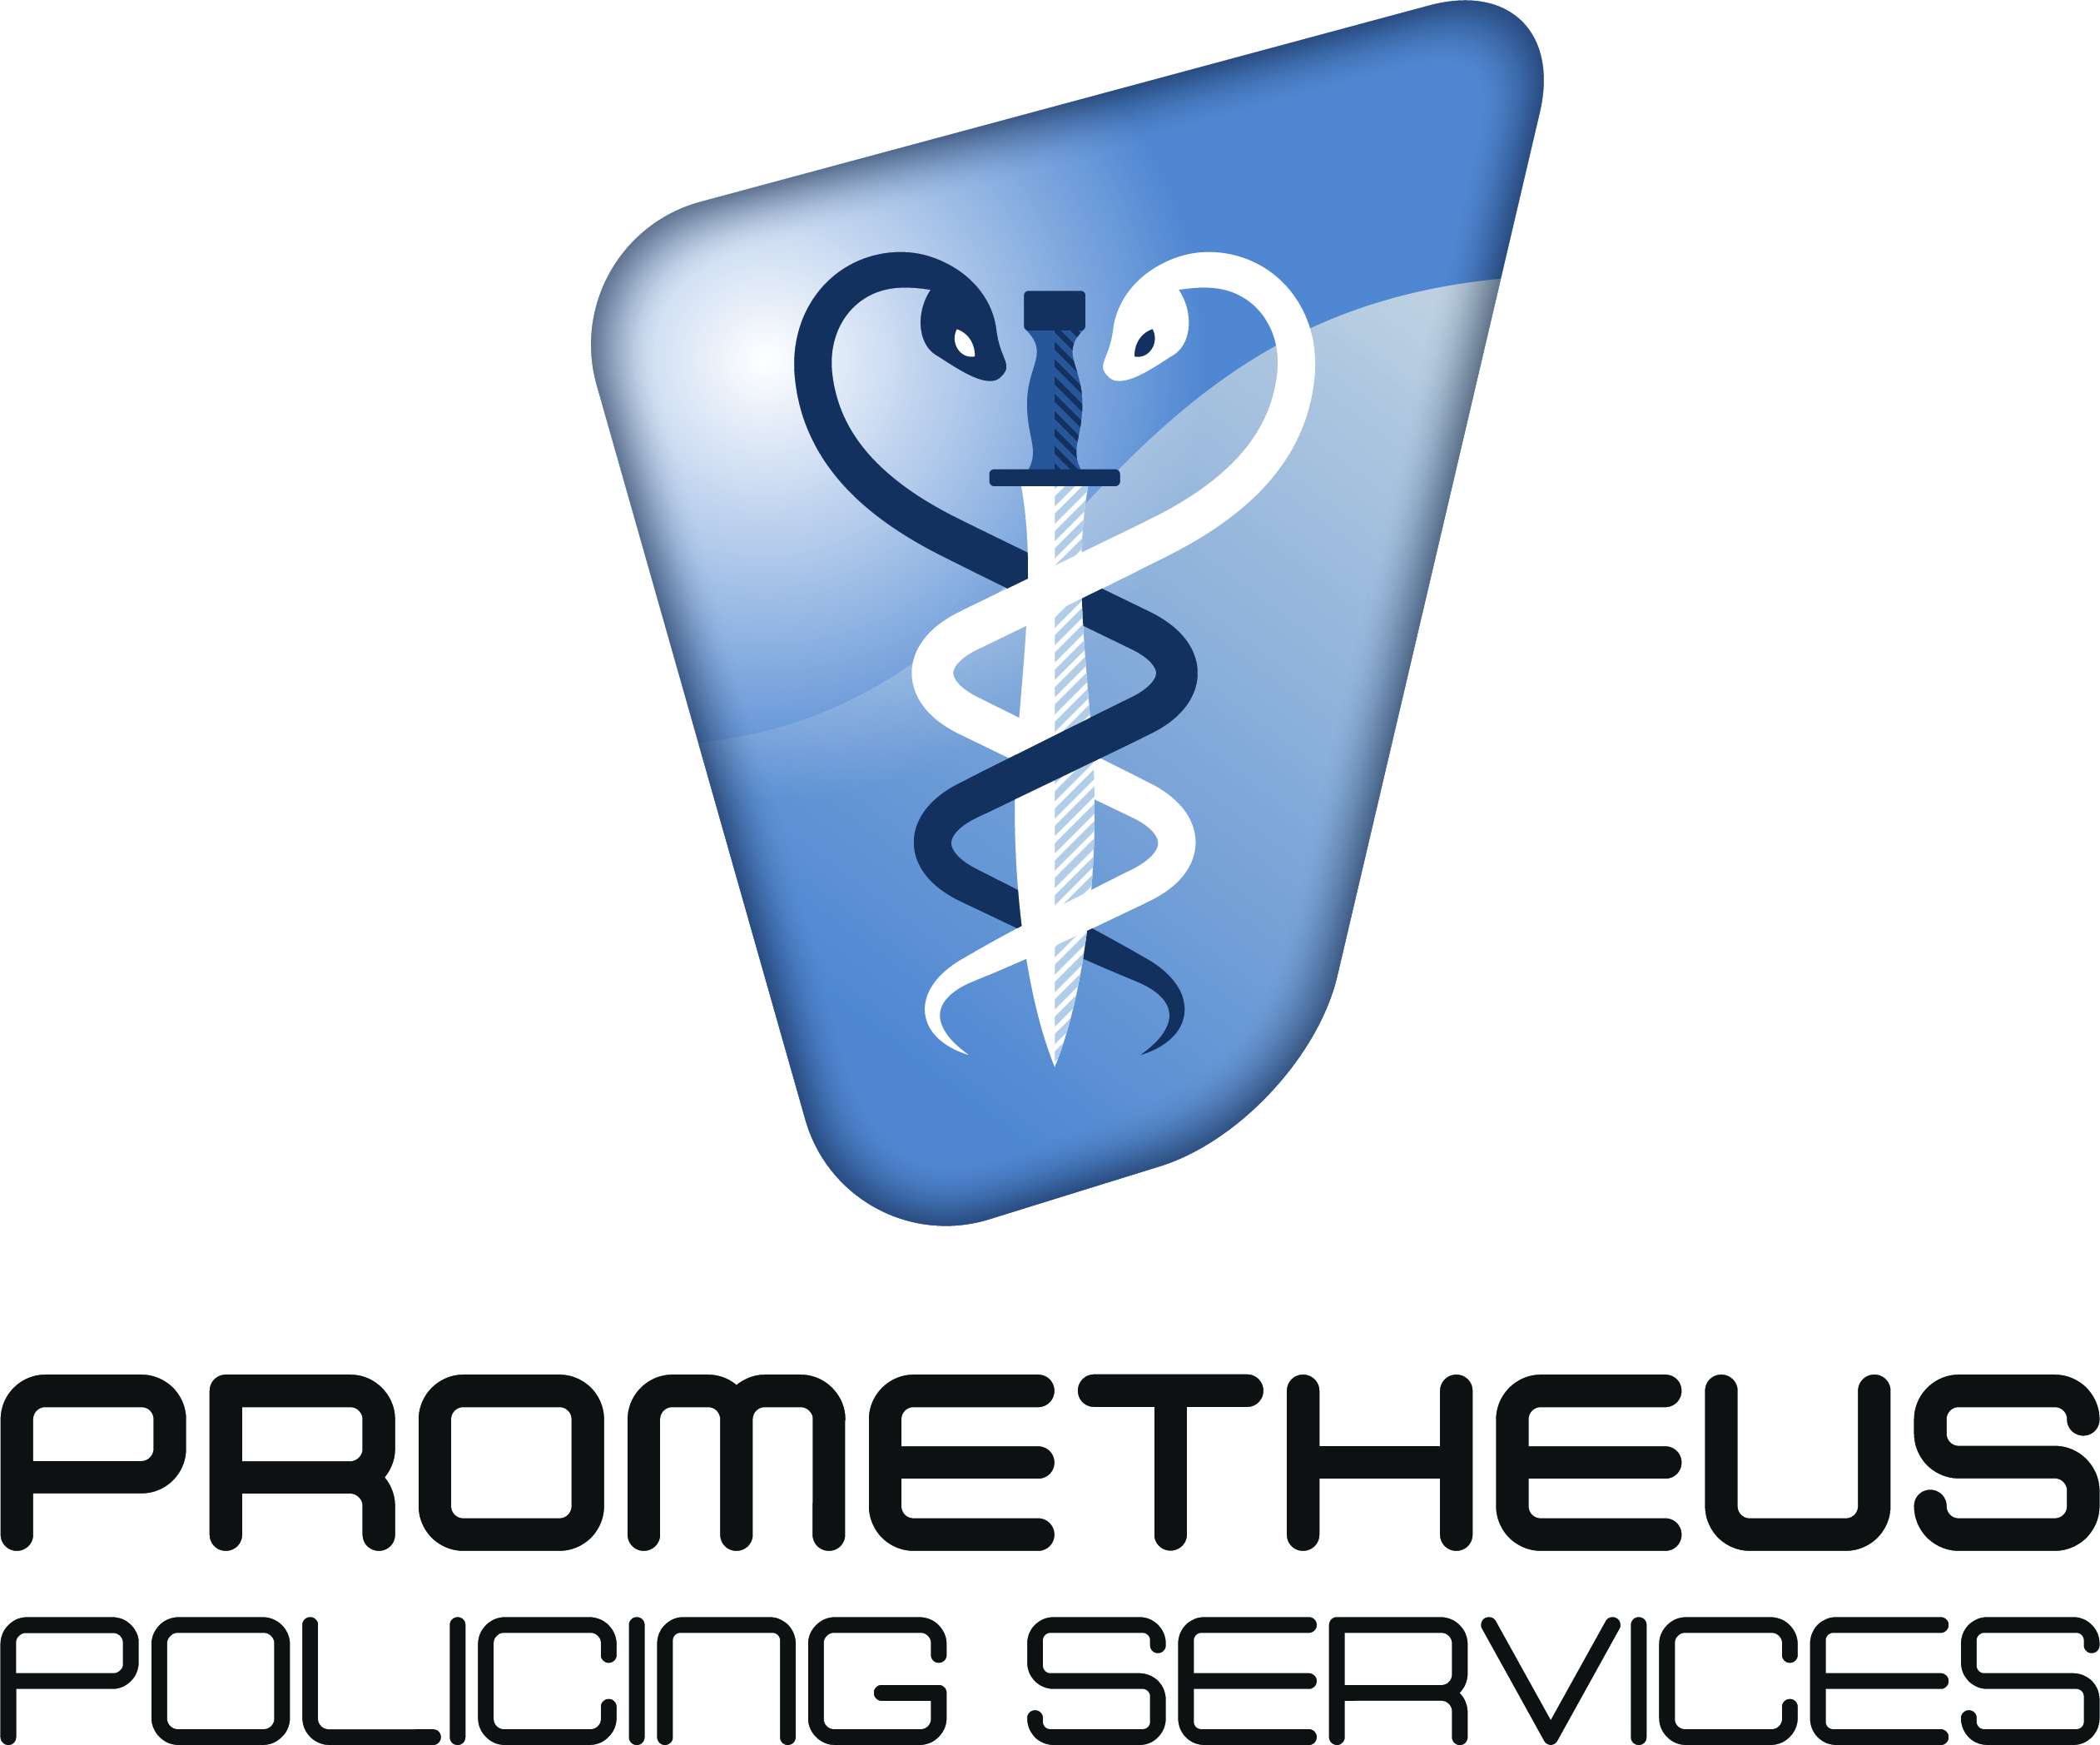 logo for Prometheus Policing Services